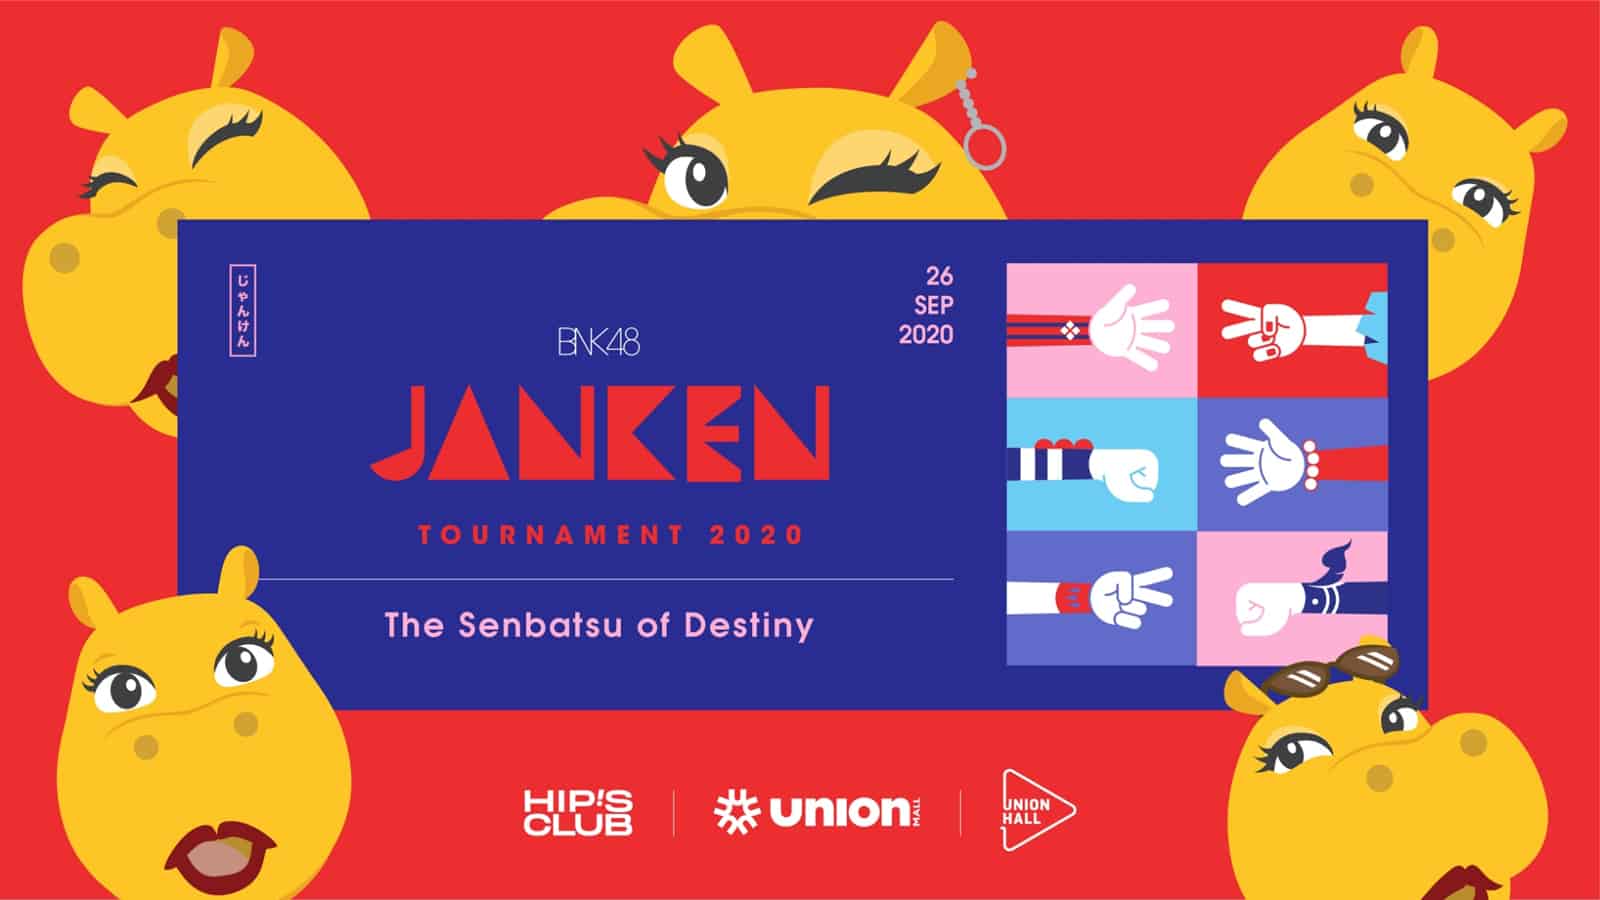 BNK48 JANKEN Tournament 2020 -The Senbatsu of Destiny-